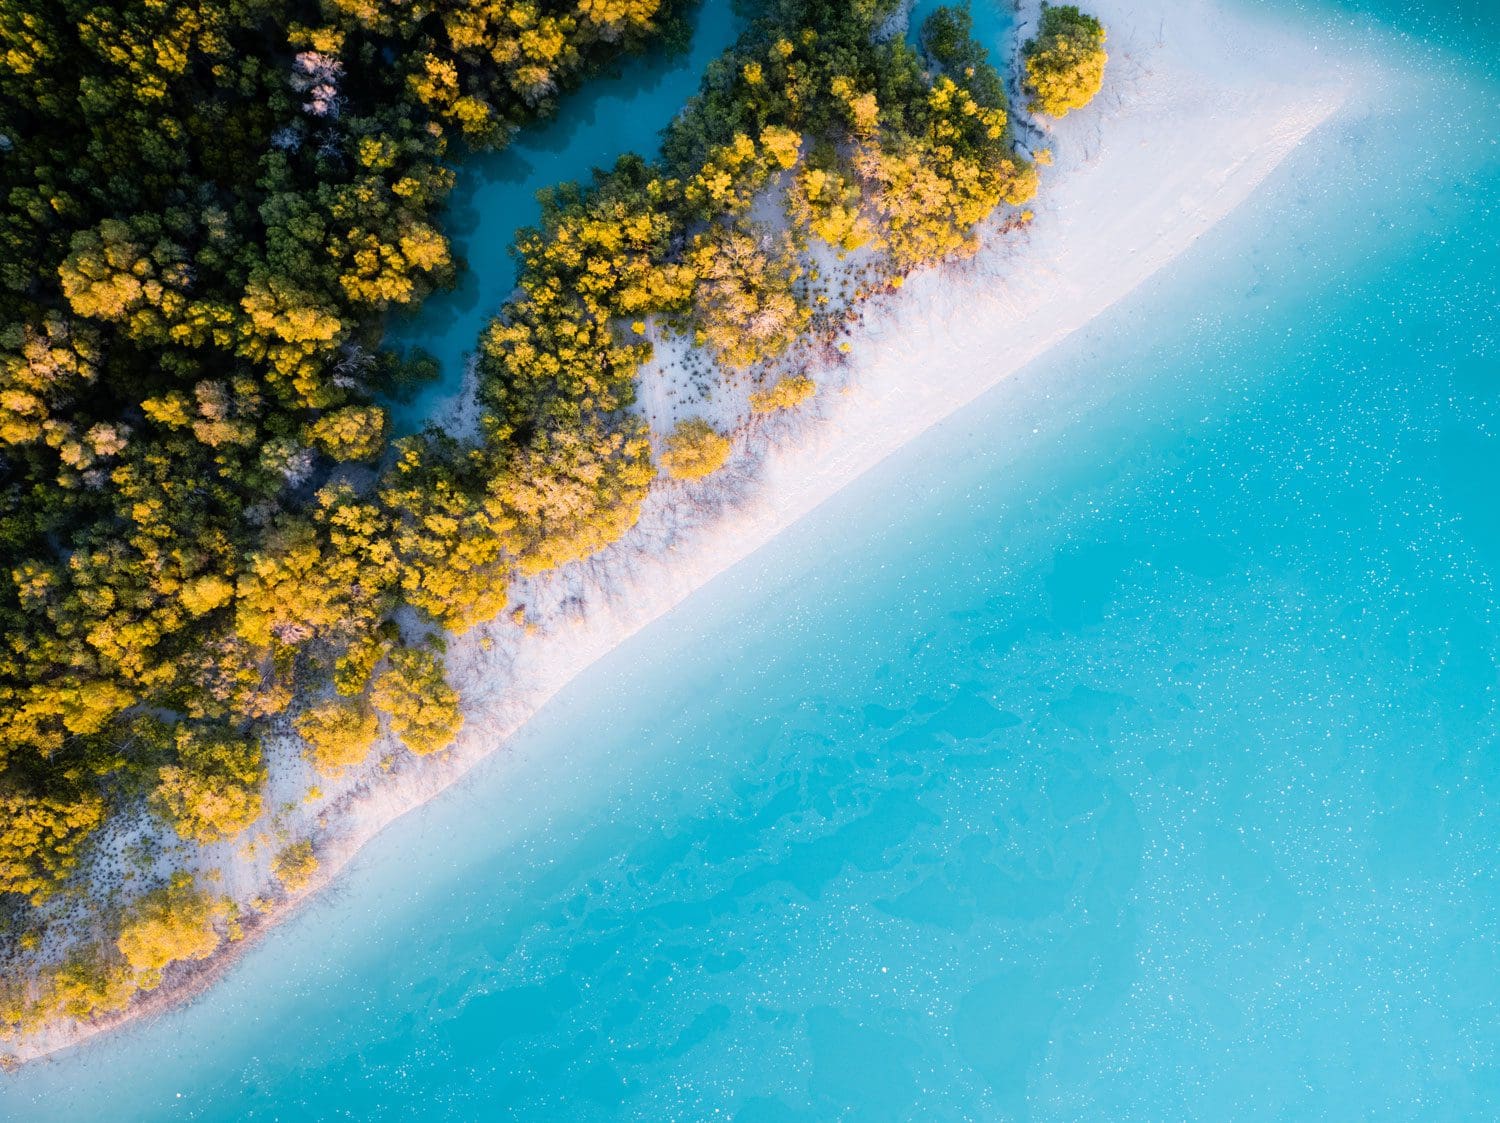 Aerial view of turquoise ocean meeting tree filled beach